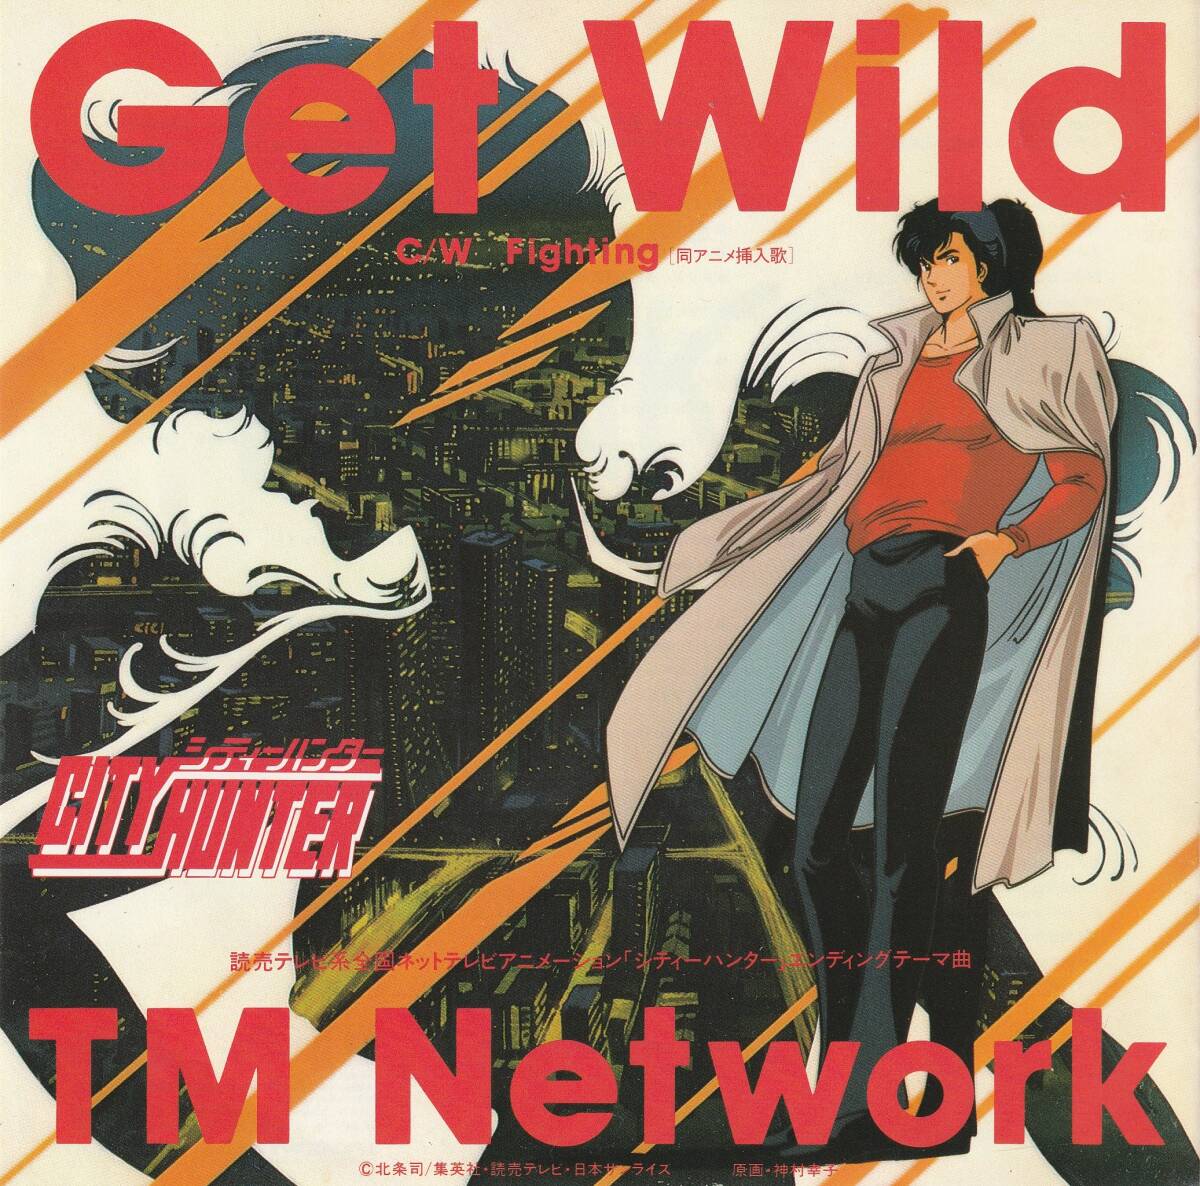  City Hunter Get Wild.)TM Network EP record 1987